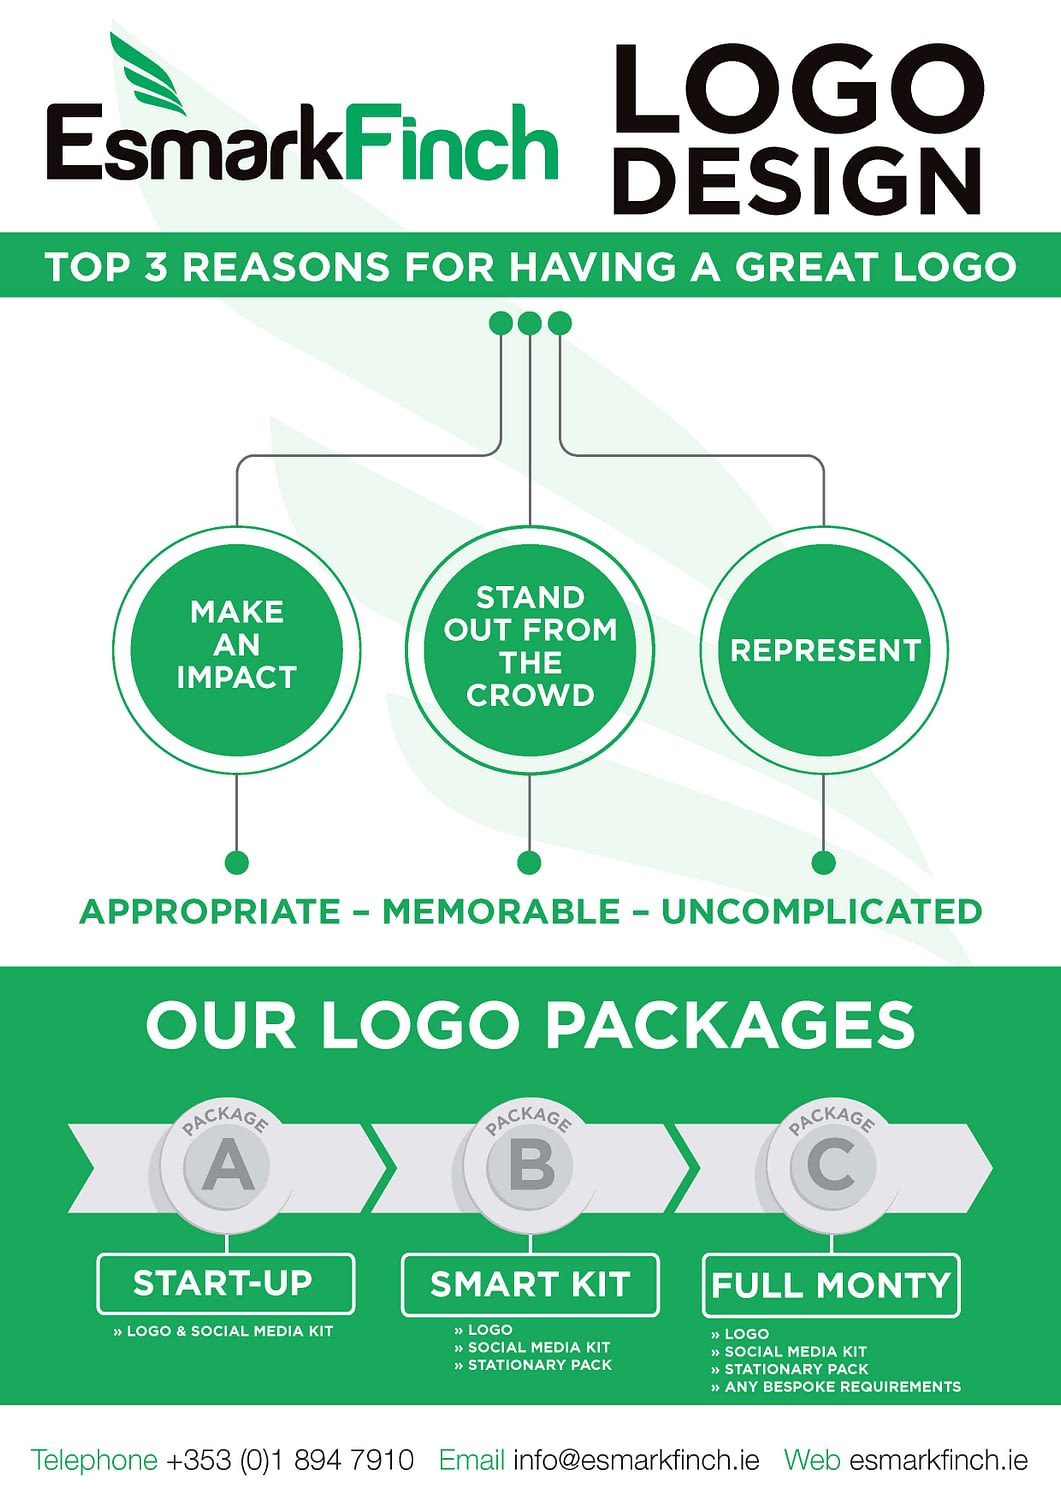 Esmark Finch Logo Design Packages